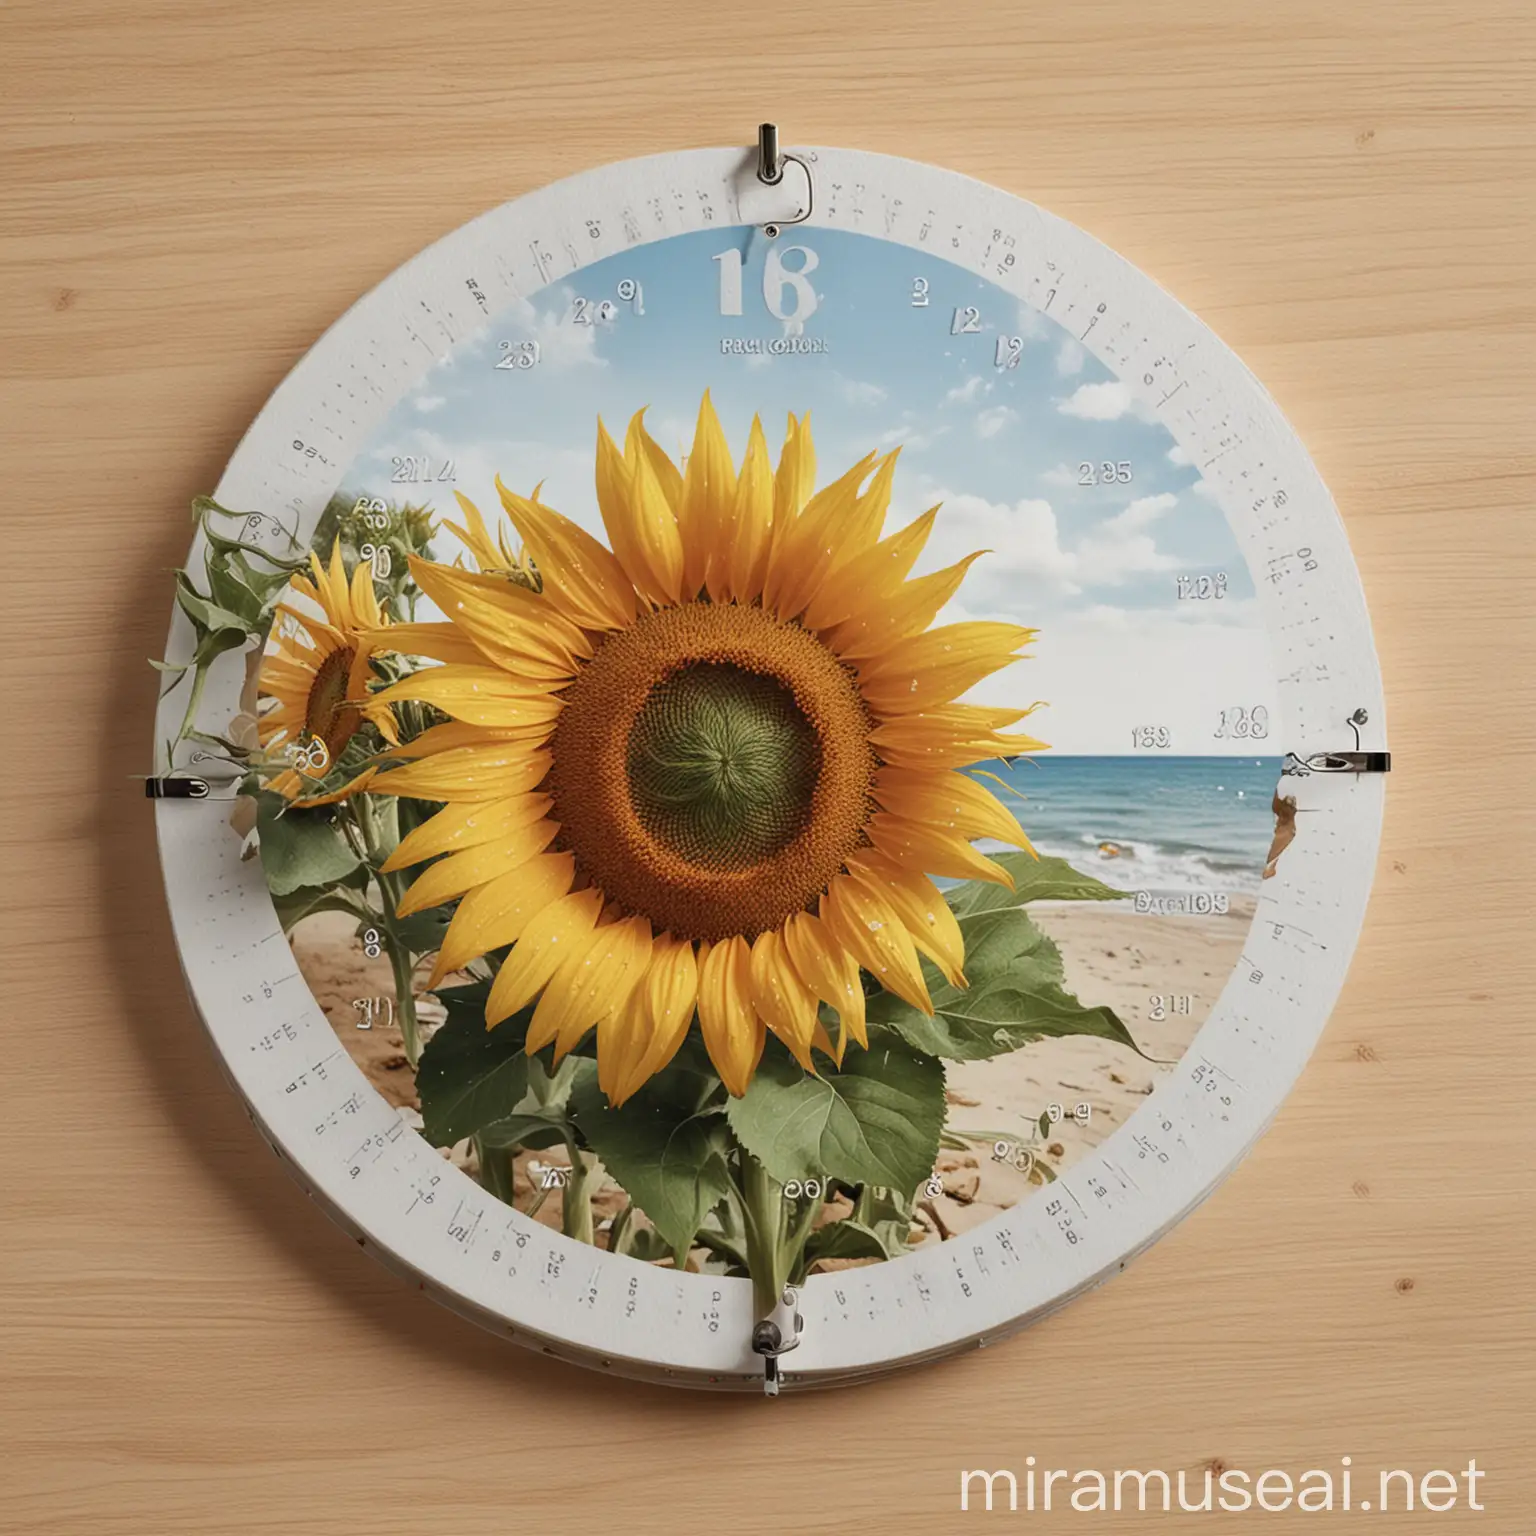 Innovative Circular Calendar with Seasonal Artwork and Holiday Icons